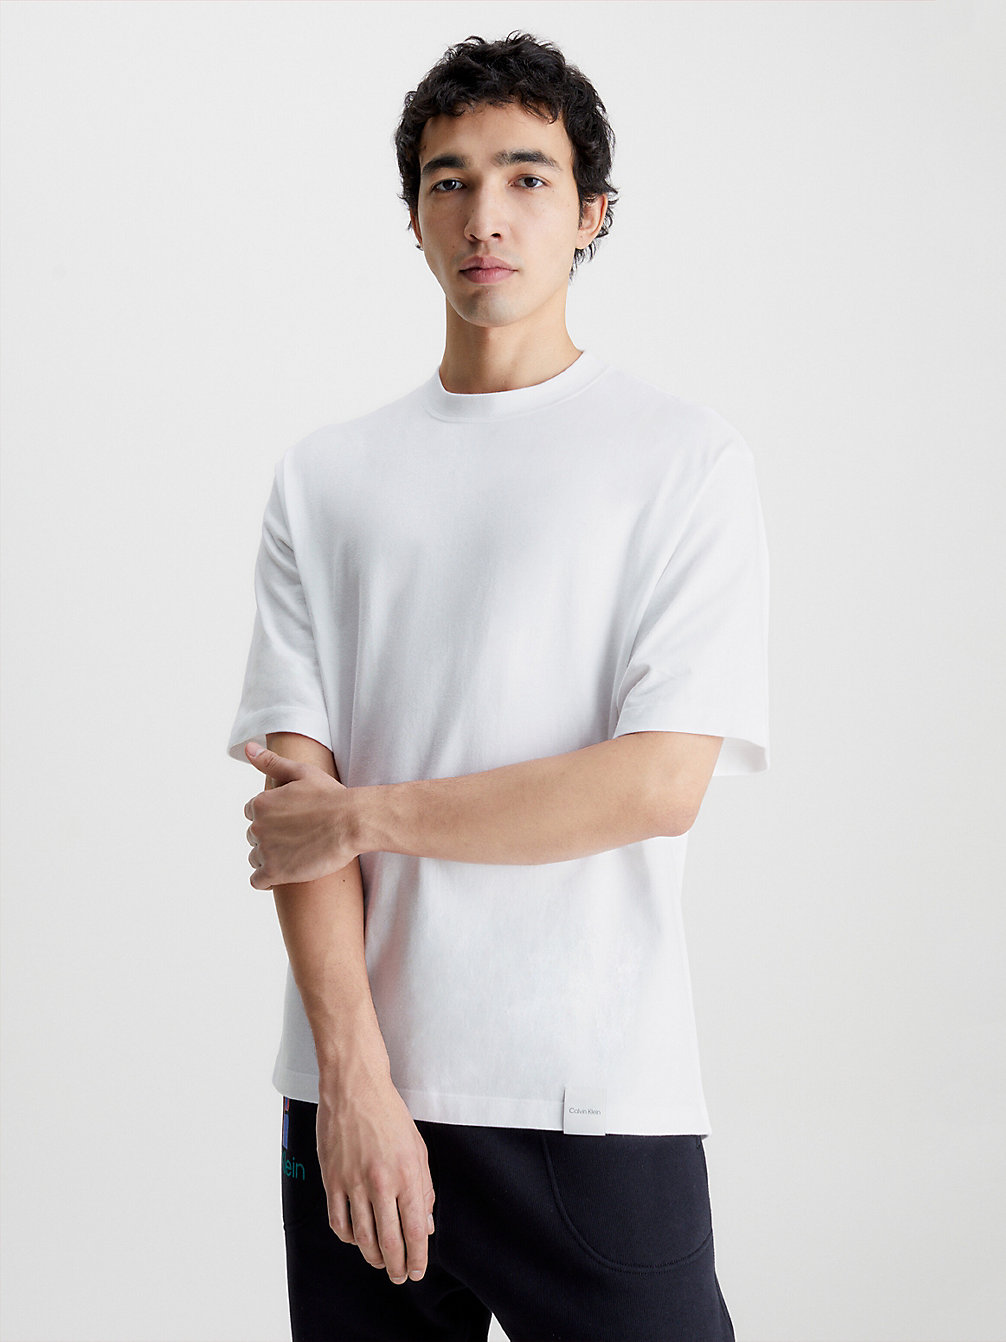 BRILLIANT WHITE Unisex Relaxed T-Shirt - CK Standards undefined men Calvin Klein